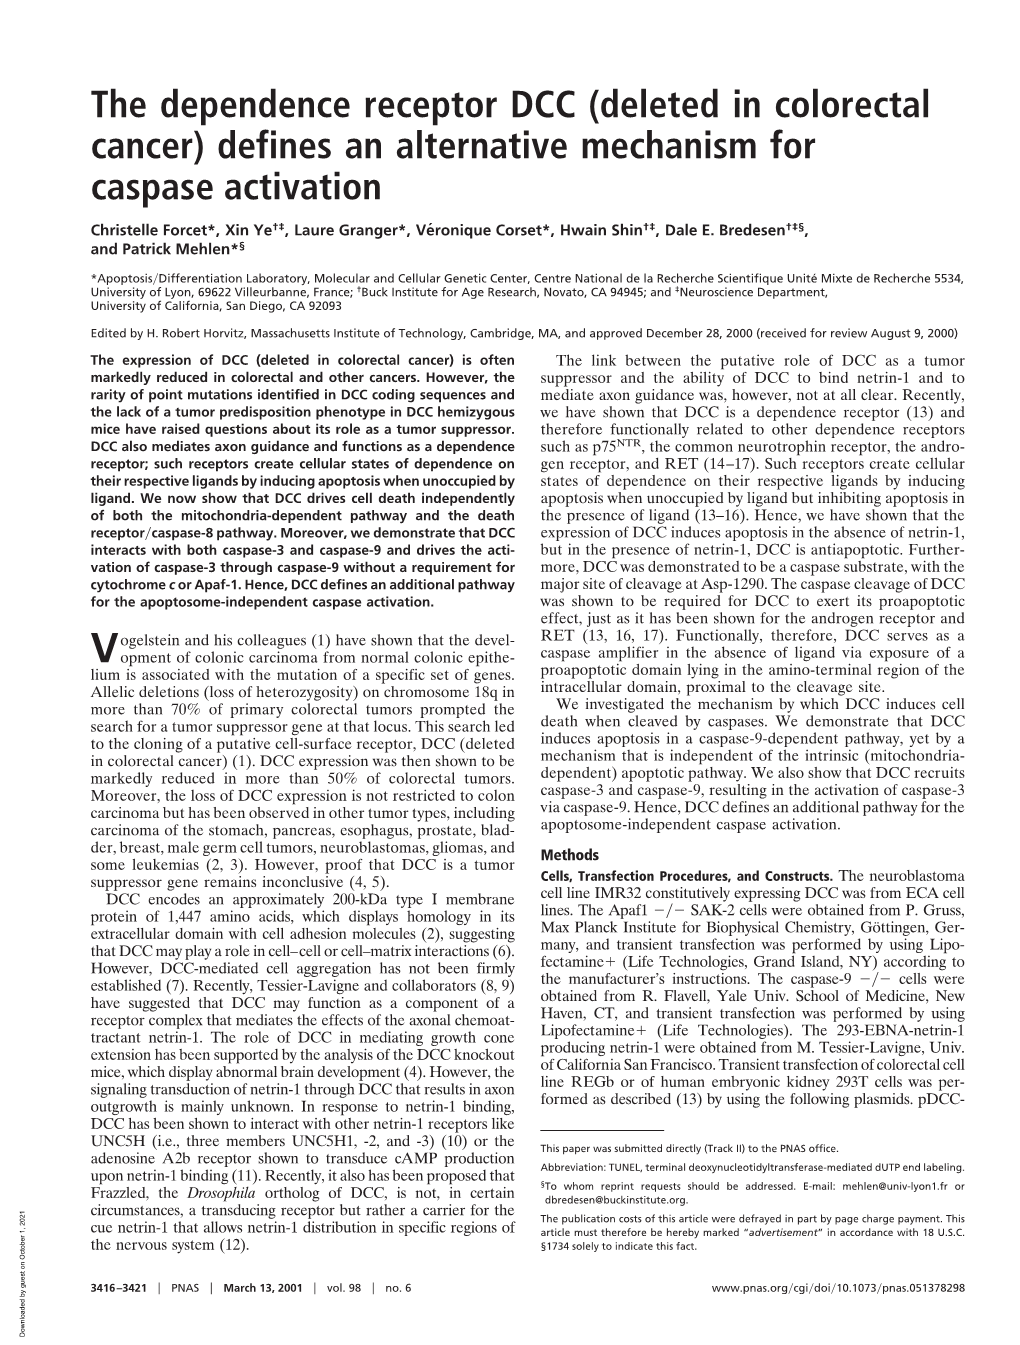 (Deleted in Colorectal Cancer) Defines an Alternative Mechanism for Caspase Activation